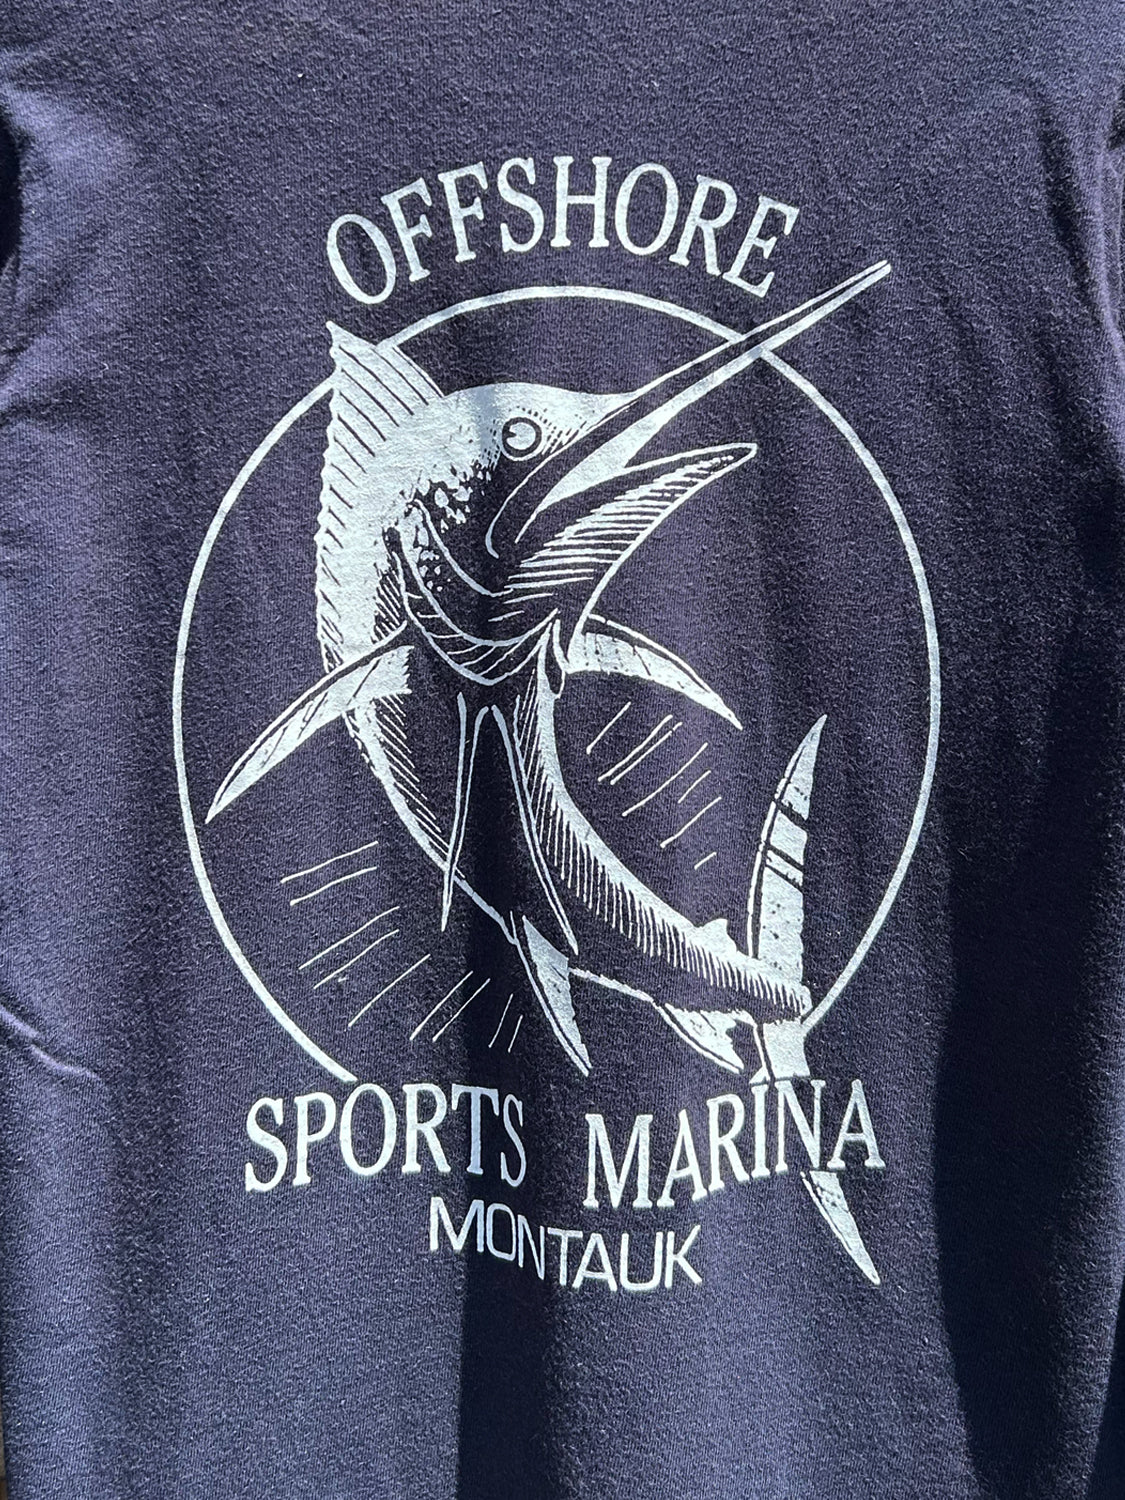 Offshore Sports Marina, Montauk Long Sleeve - 1980s